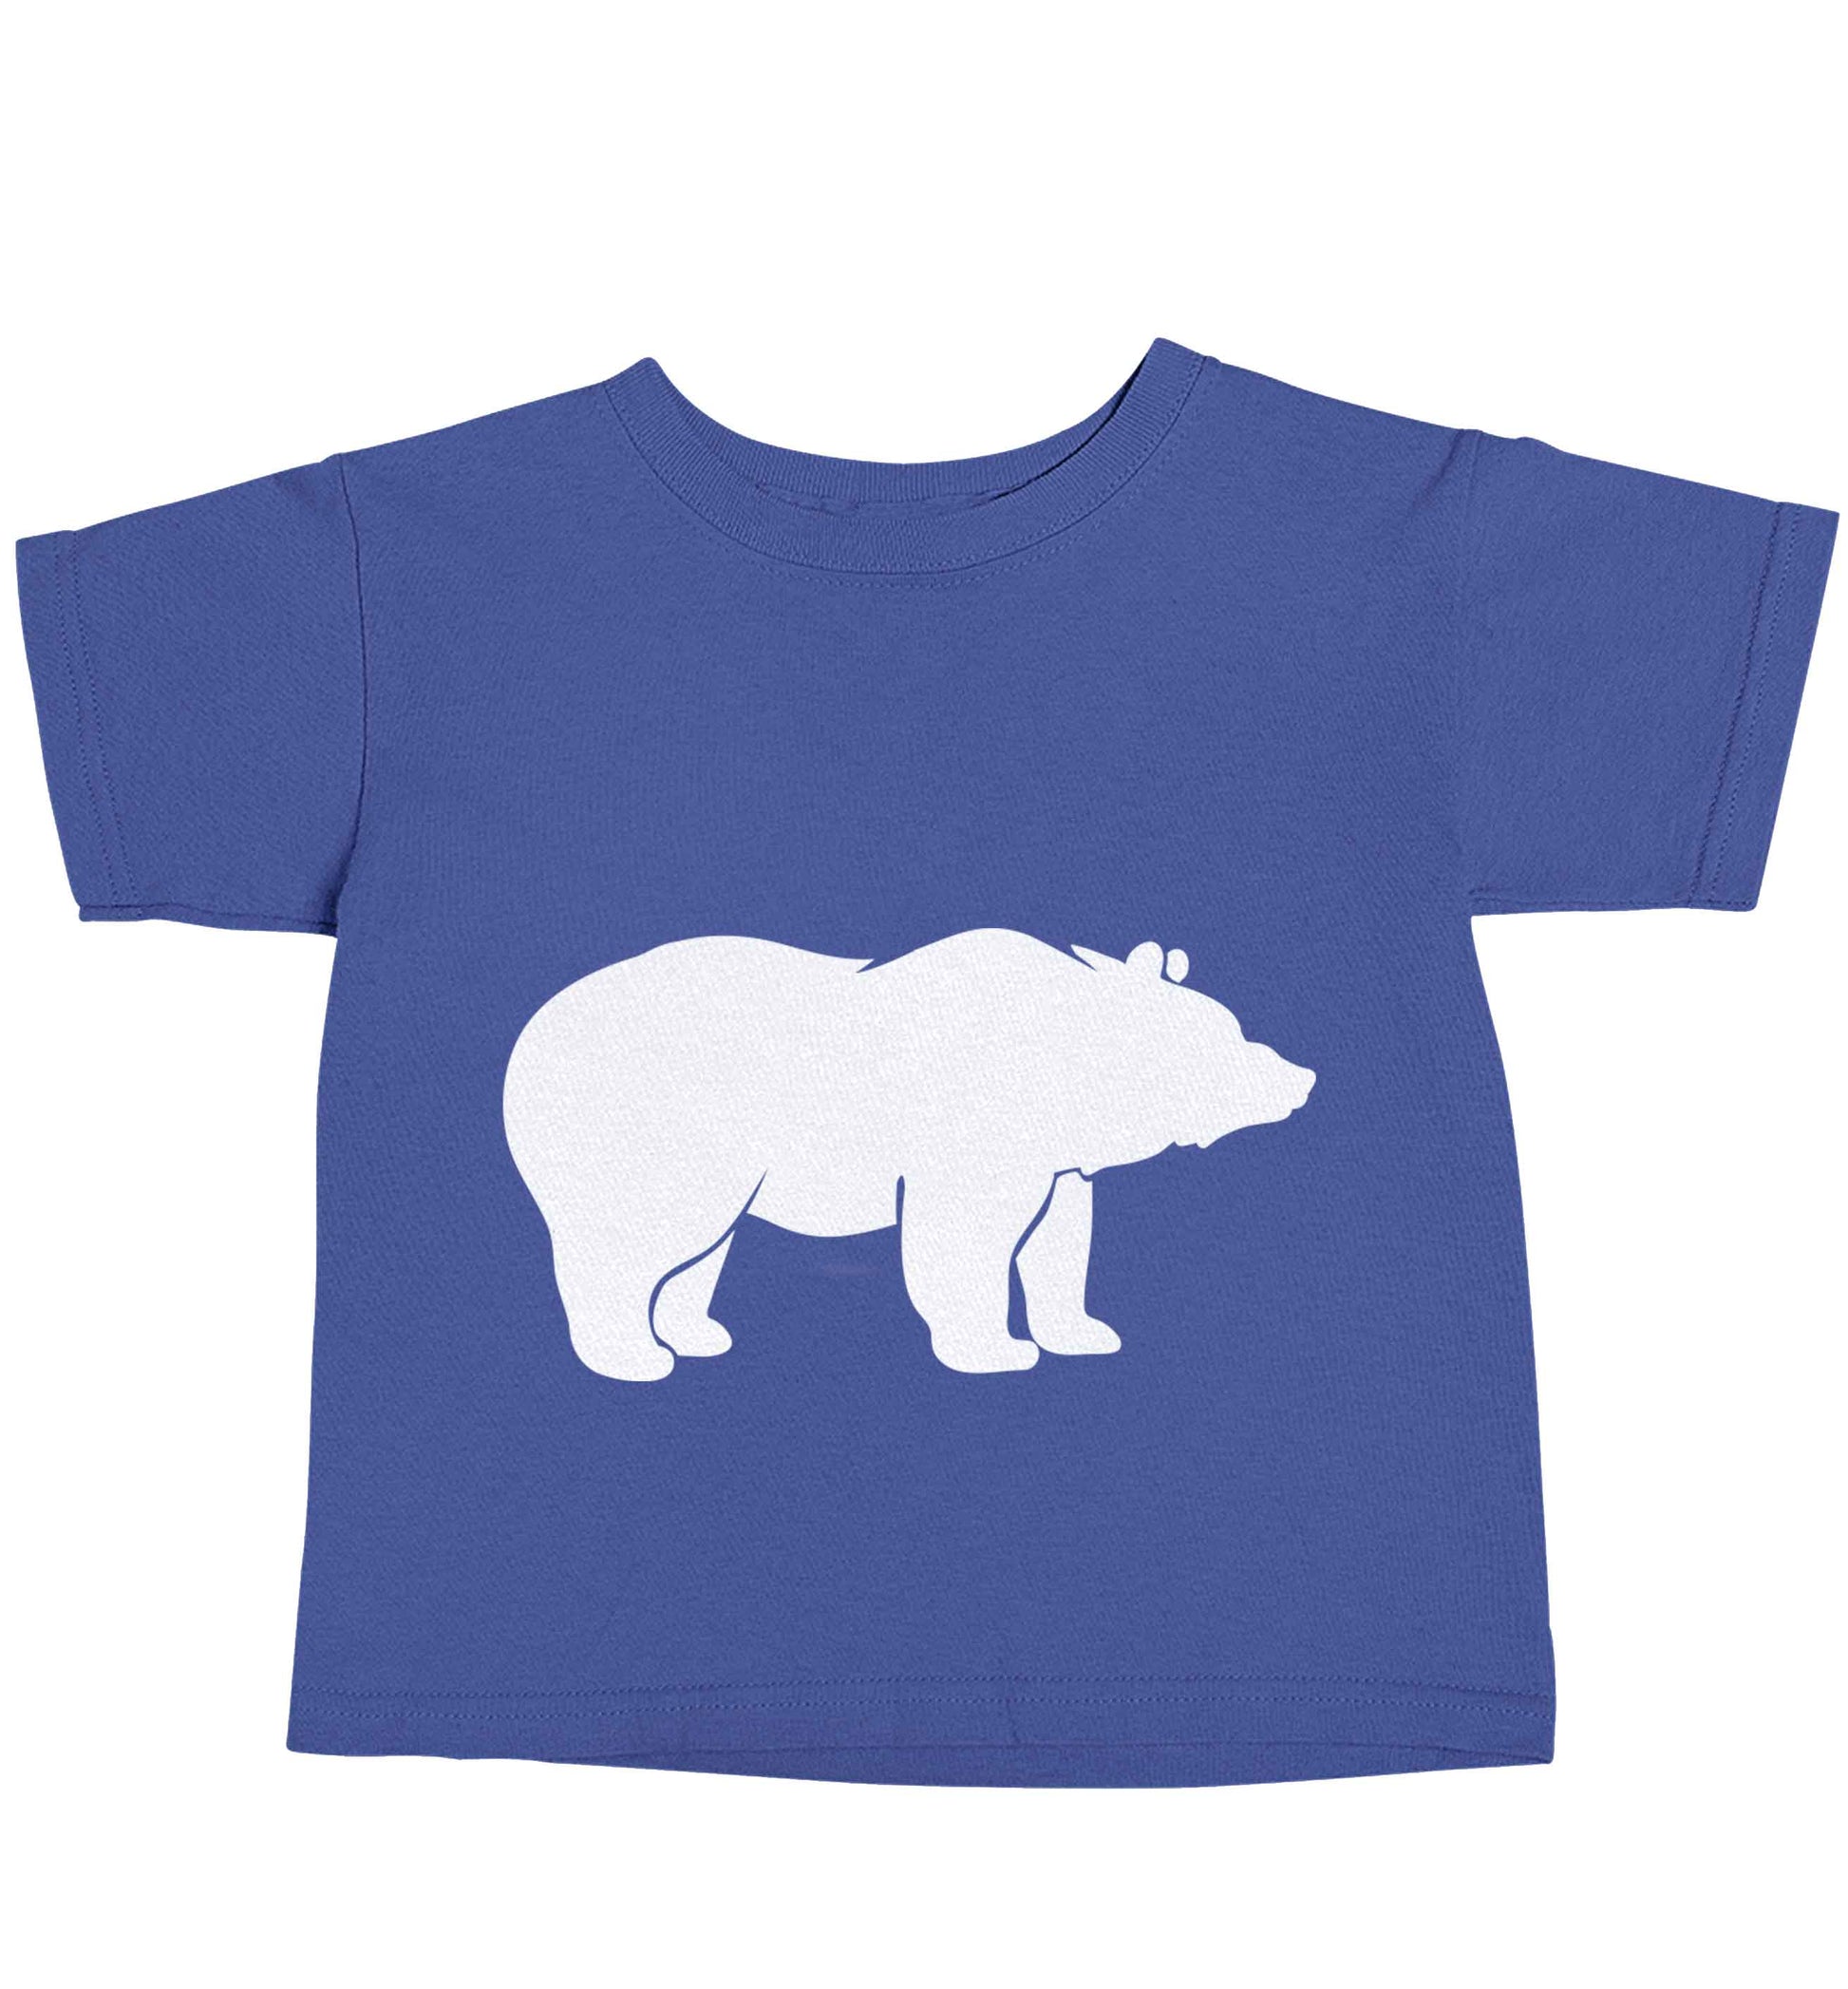 Blue bear blue baby toddler Tshirt 2 Years